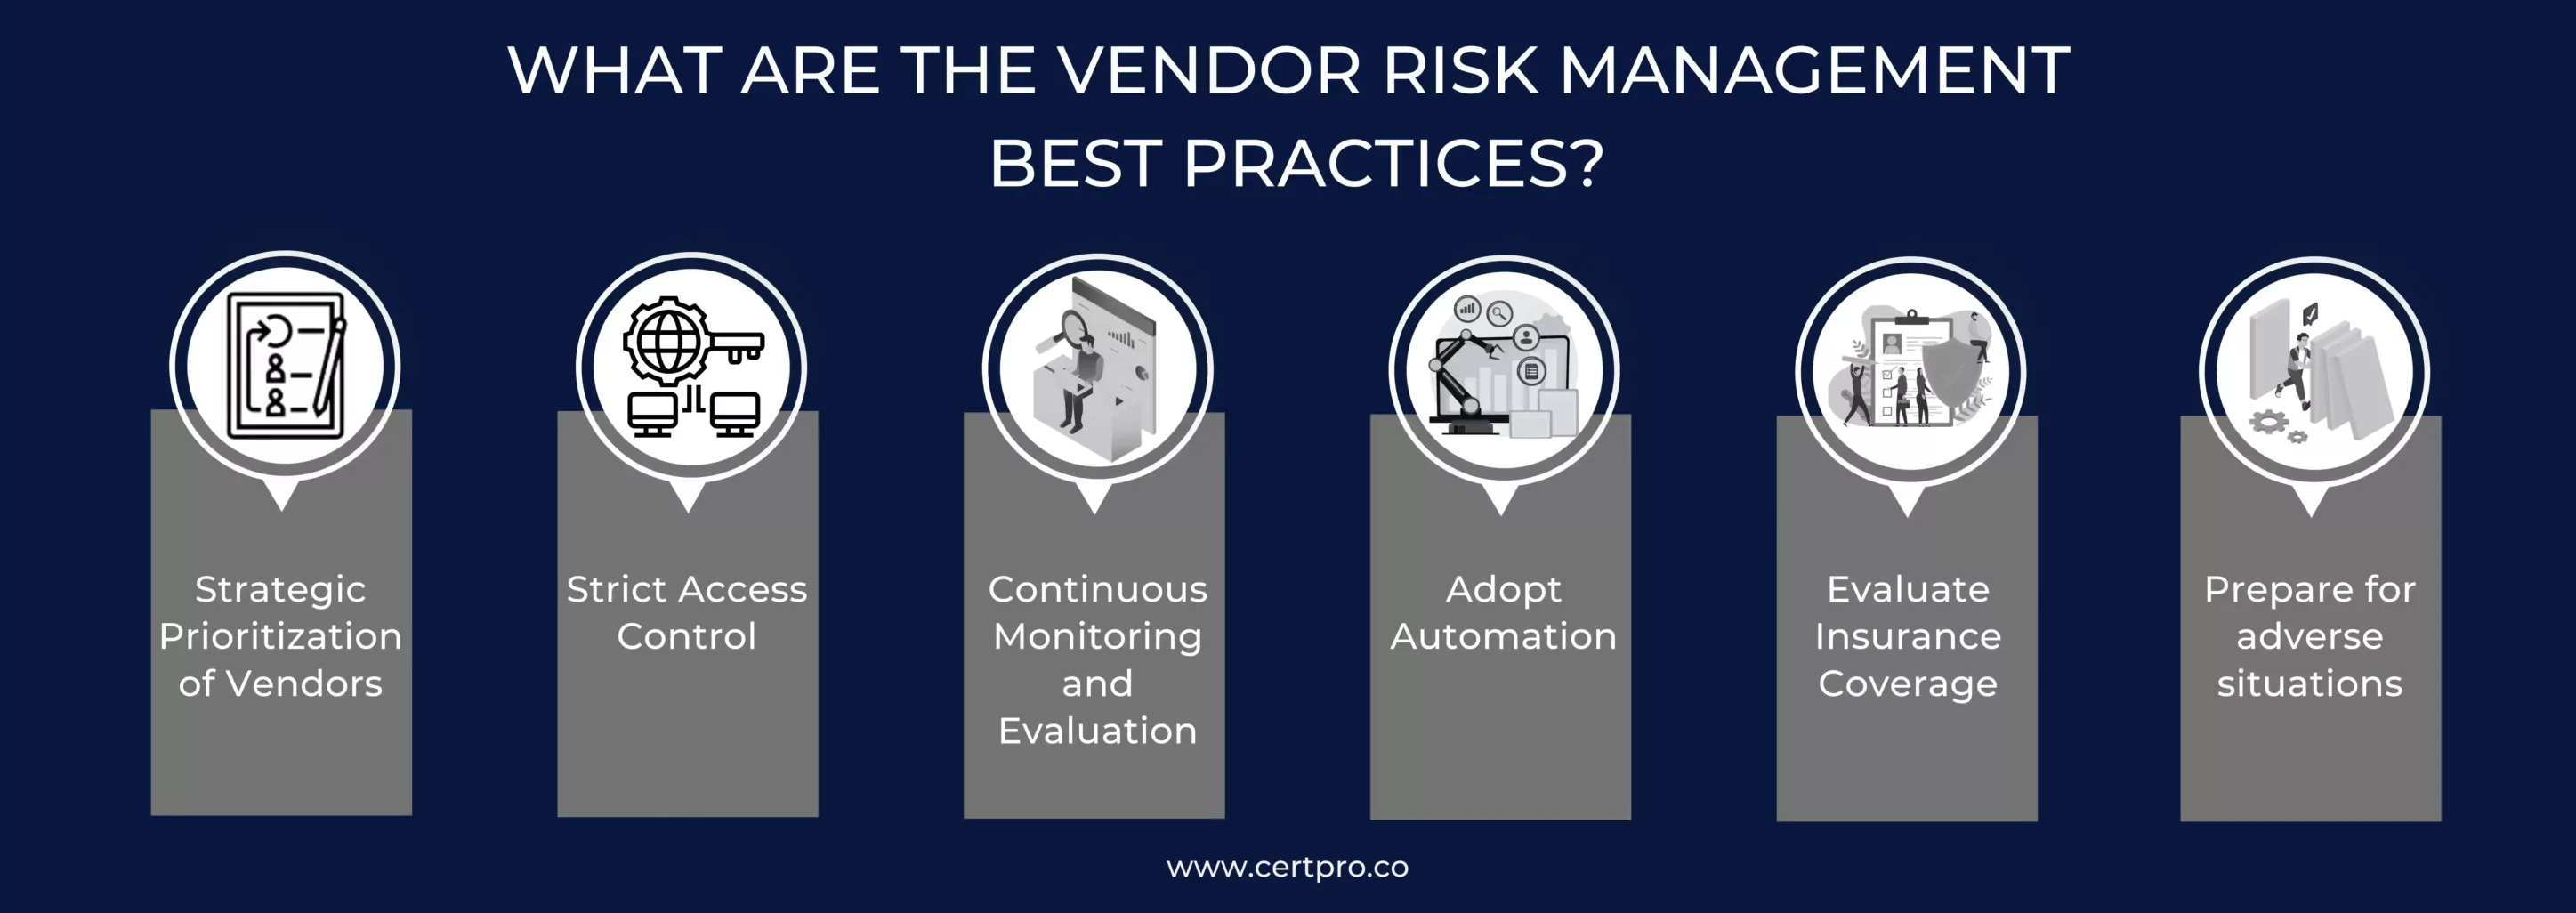 vendor risk management best practices